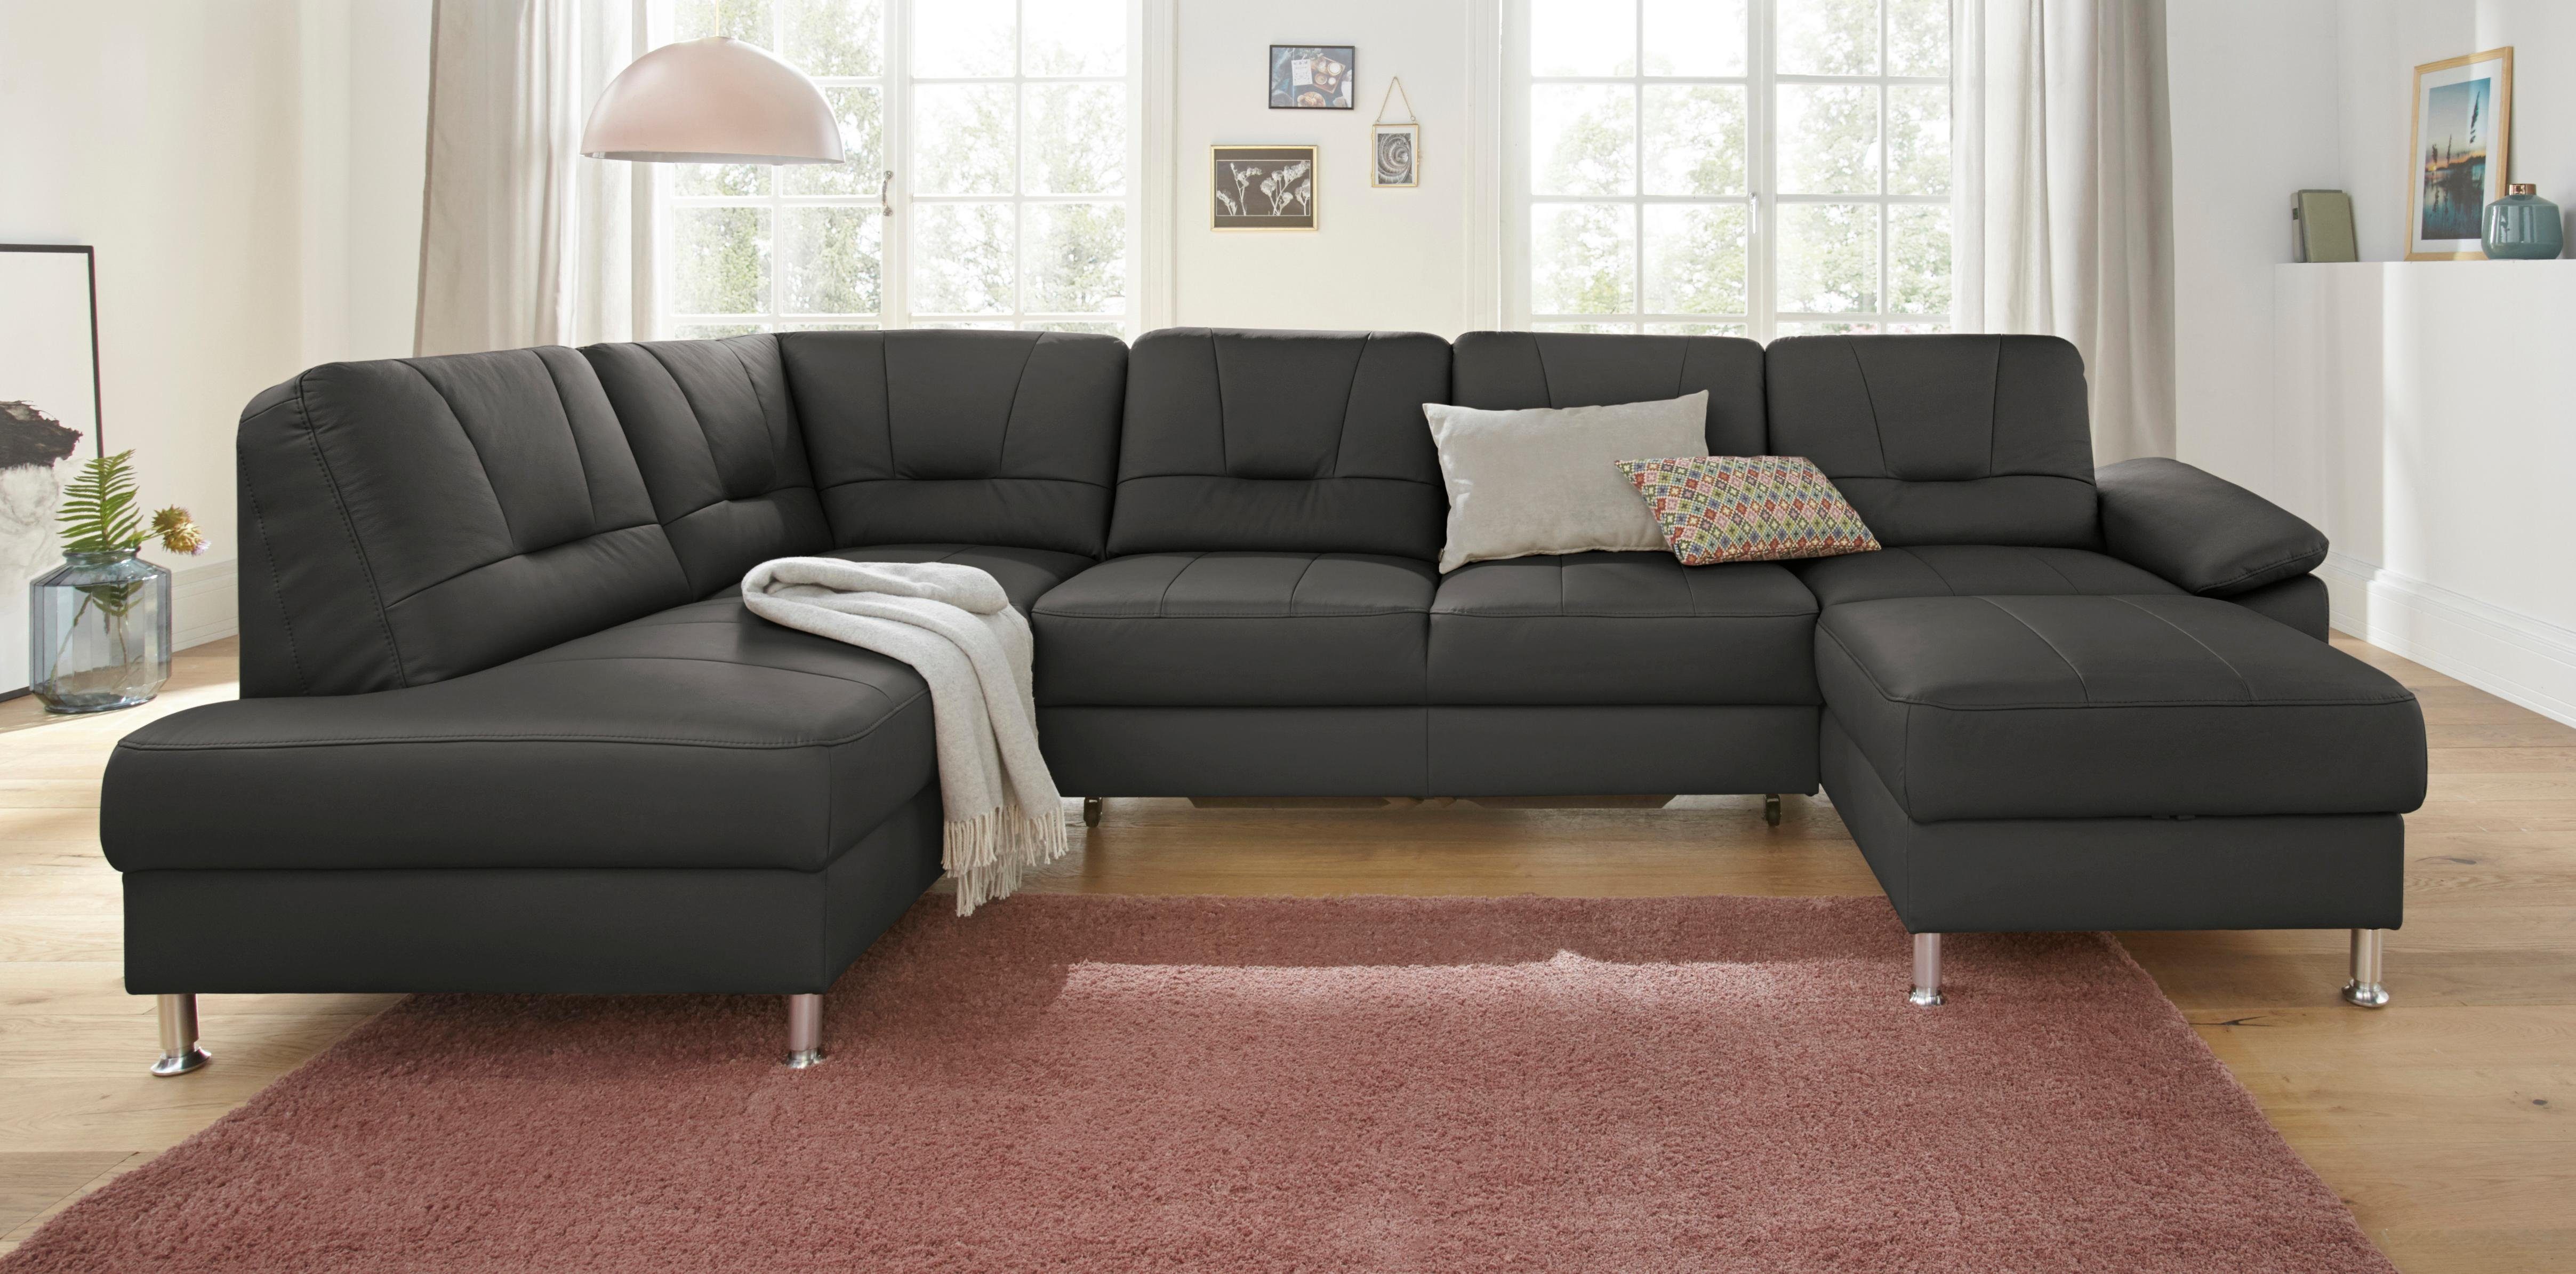 exxpo - sofa fashion Zithoek optioneel met bedfunctie